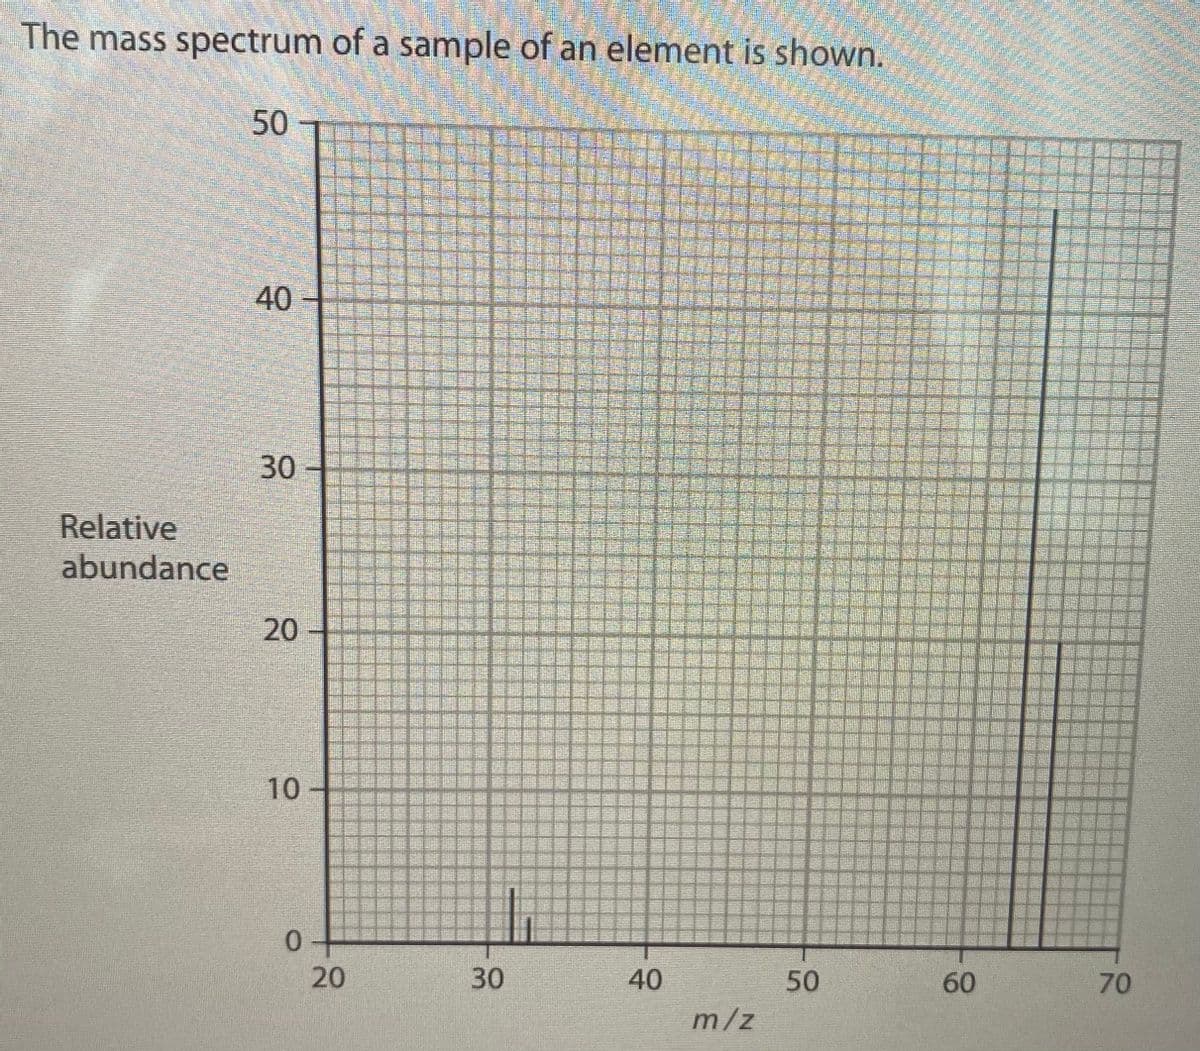 The mass spectrum of a sample of an element is shown.
50
Relative
abundance
20
10
0.
20
30
40
50
60
70
m/z
40
30
